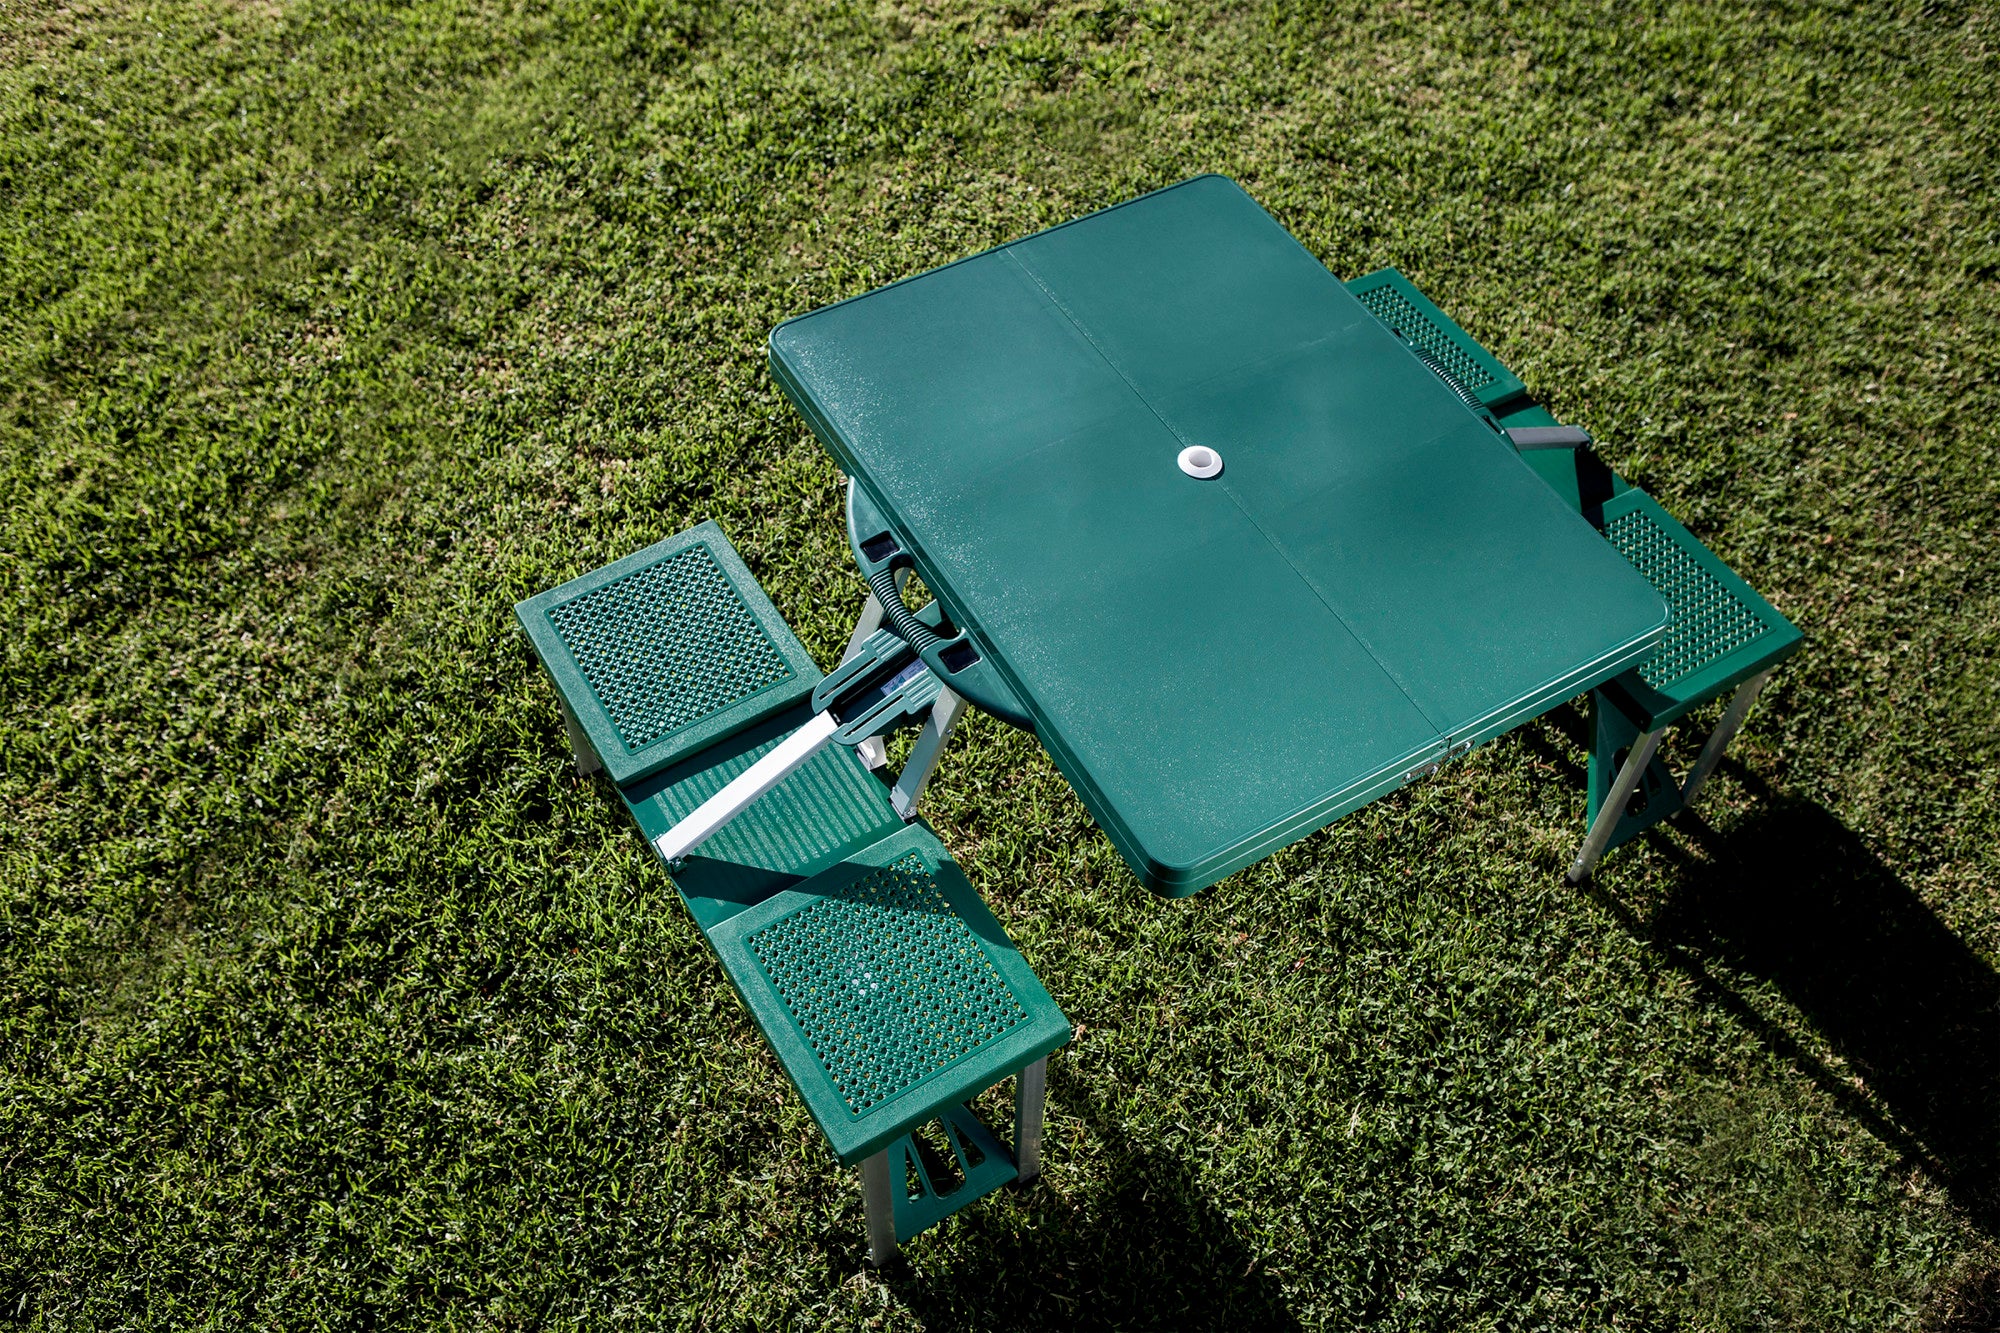 Oregon Ducks Football Field - Picnic Table Portable Folding Table with Seats